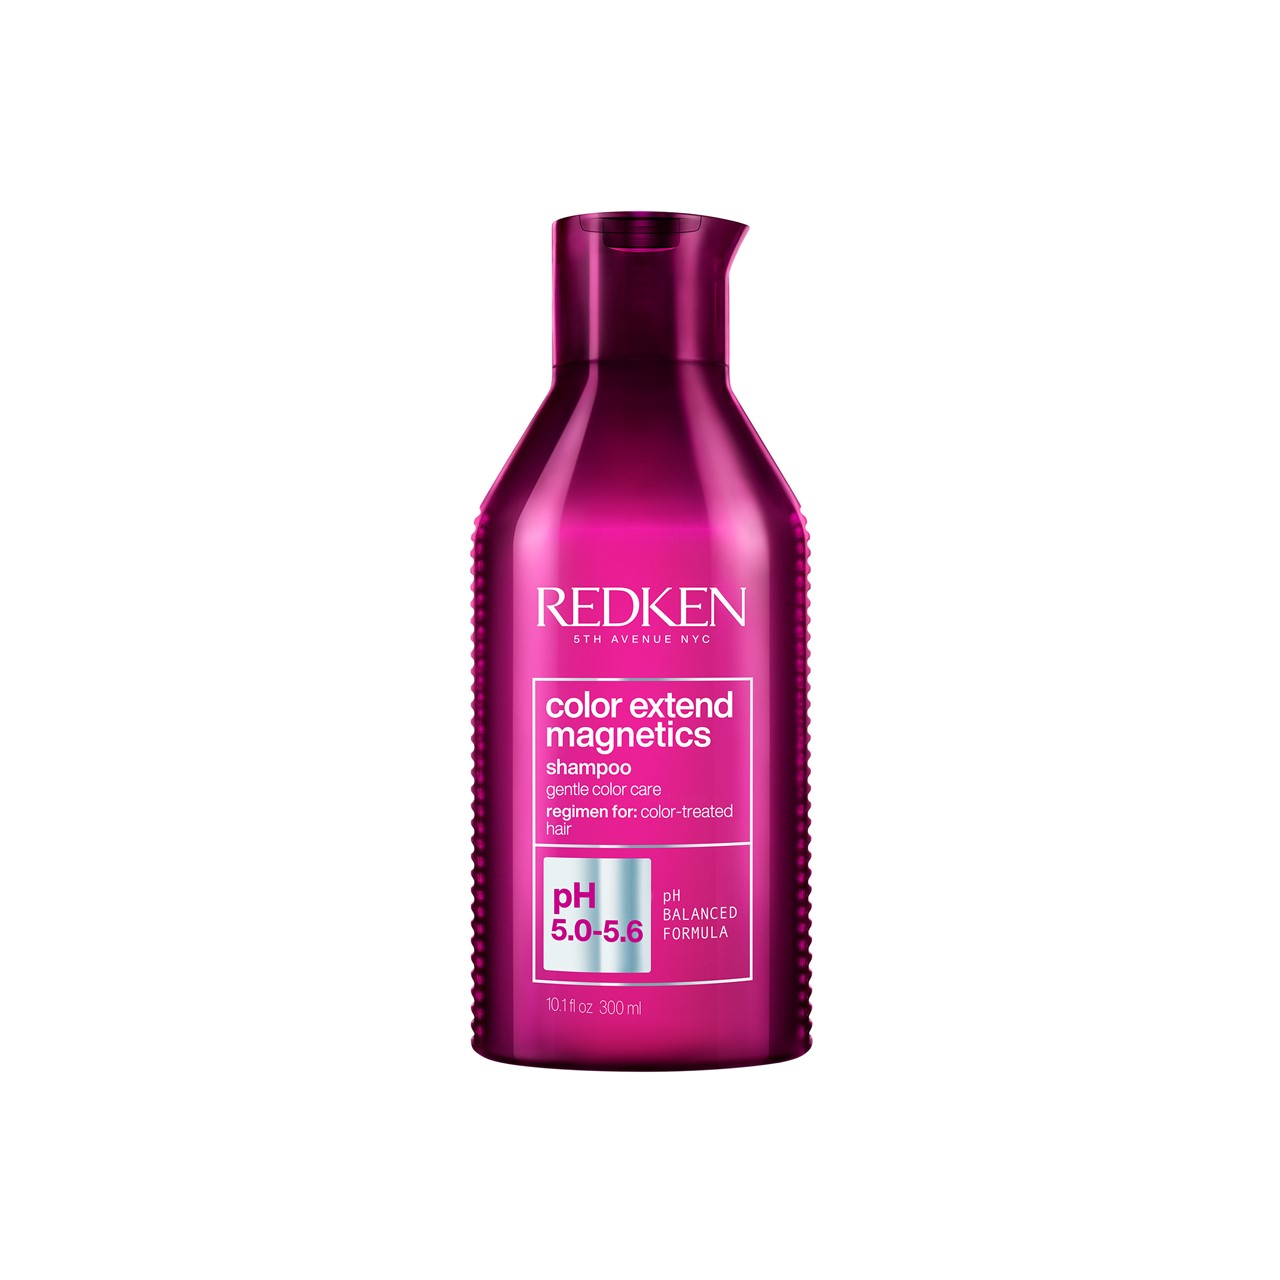 Redken Color Extend Magnetics Shampoo 300ml (10.14fl oz)